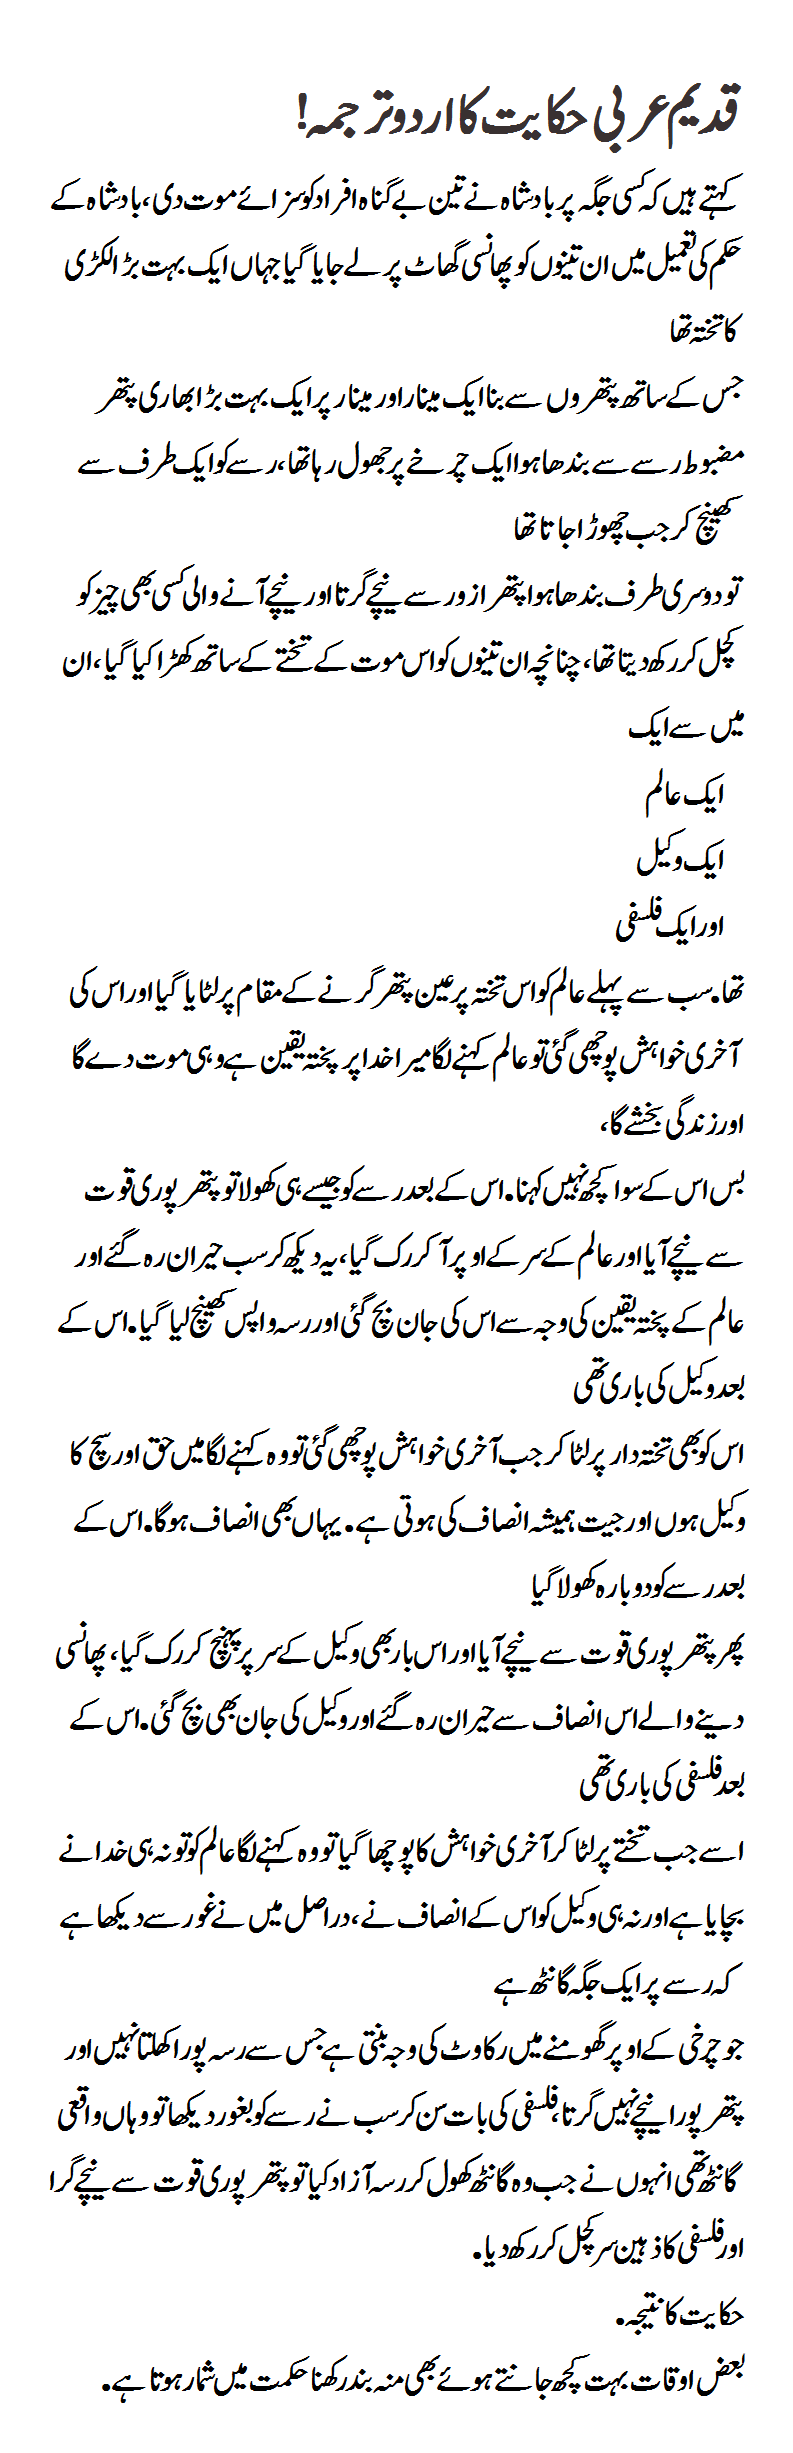 Urdu translation of an ancient Arabic story